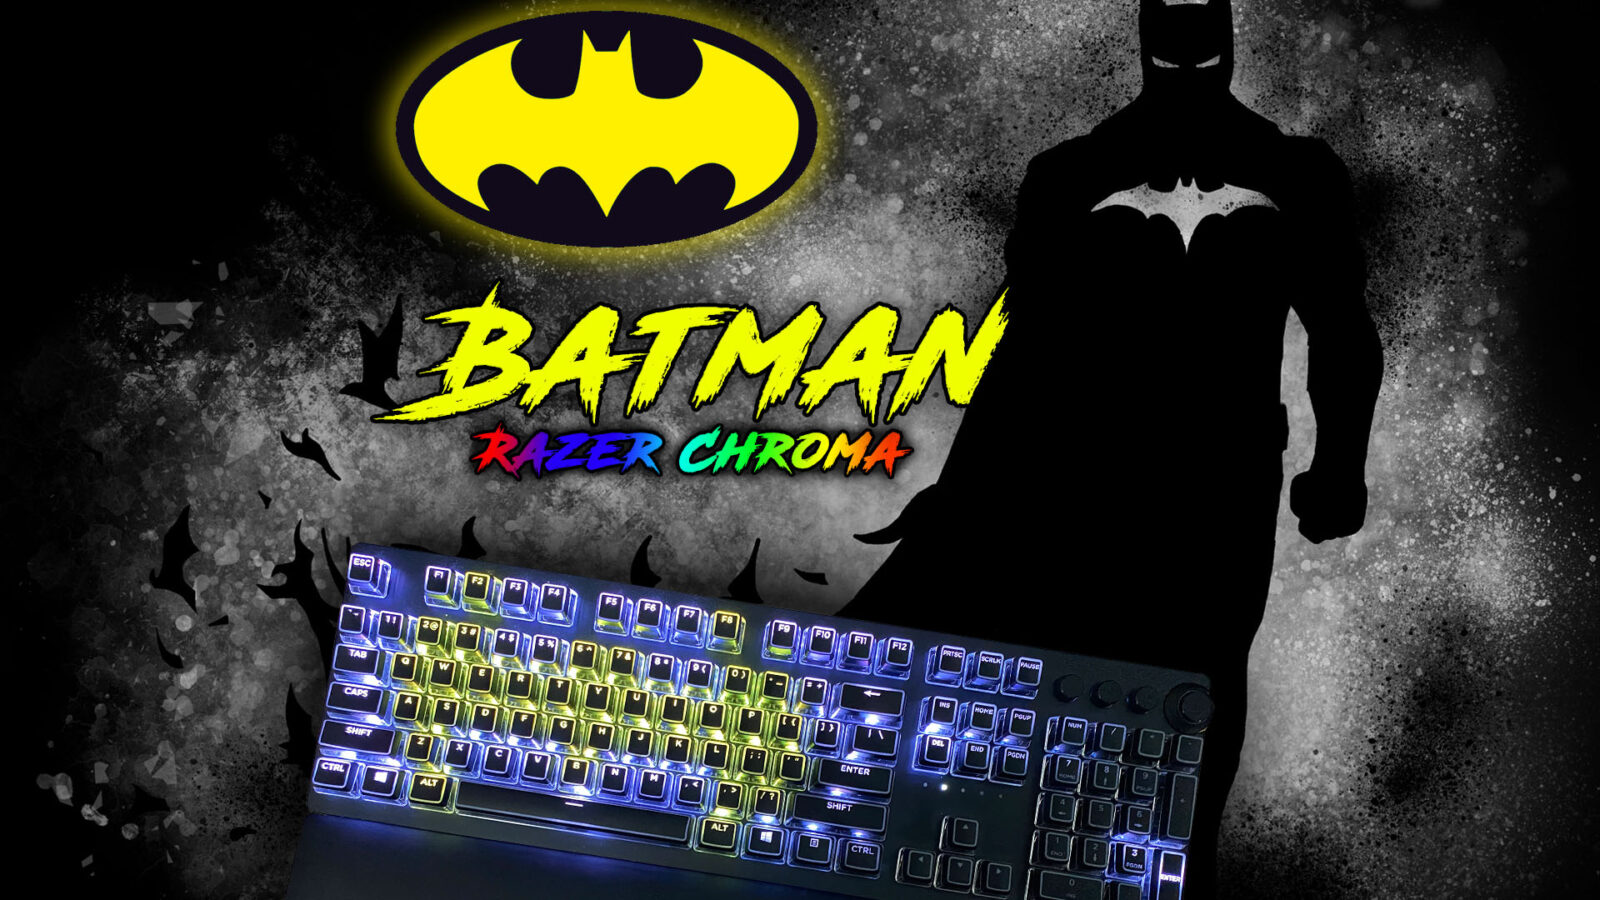 Batman Razer Chroma Profile